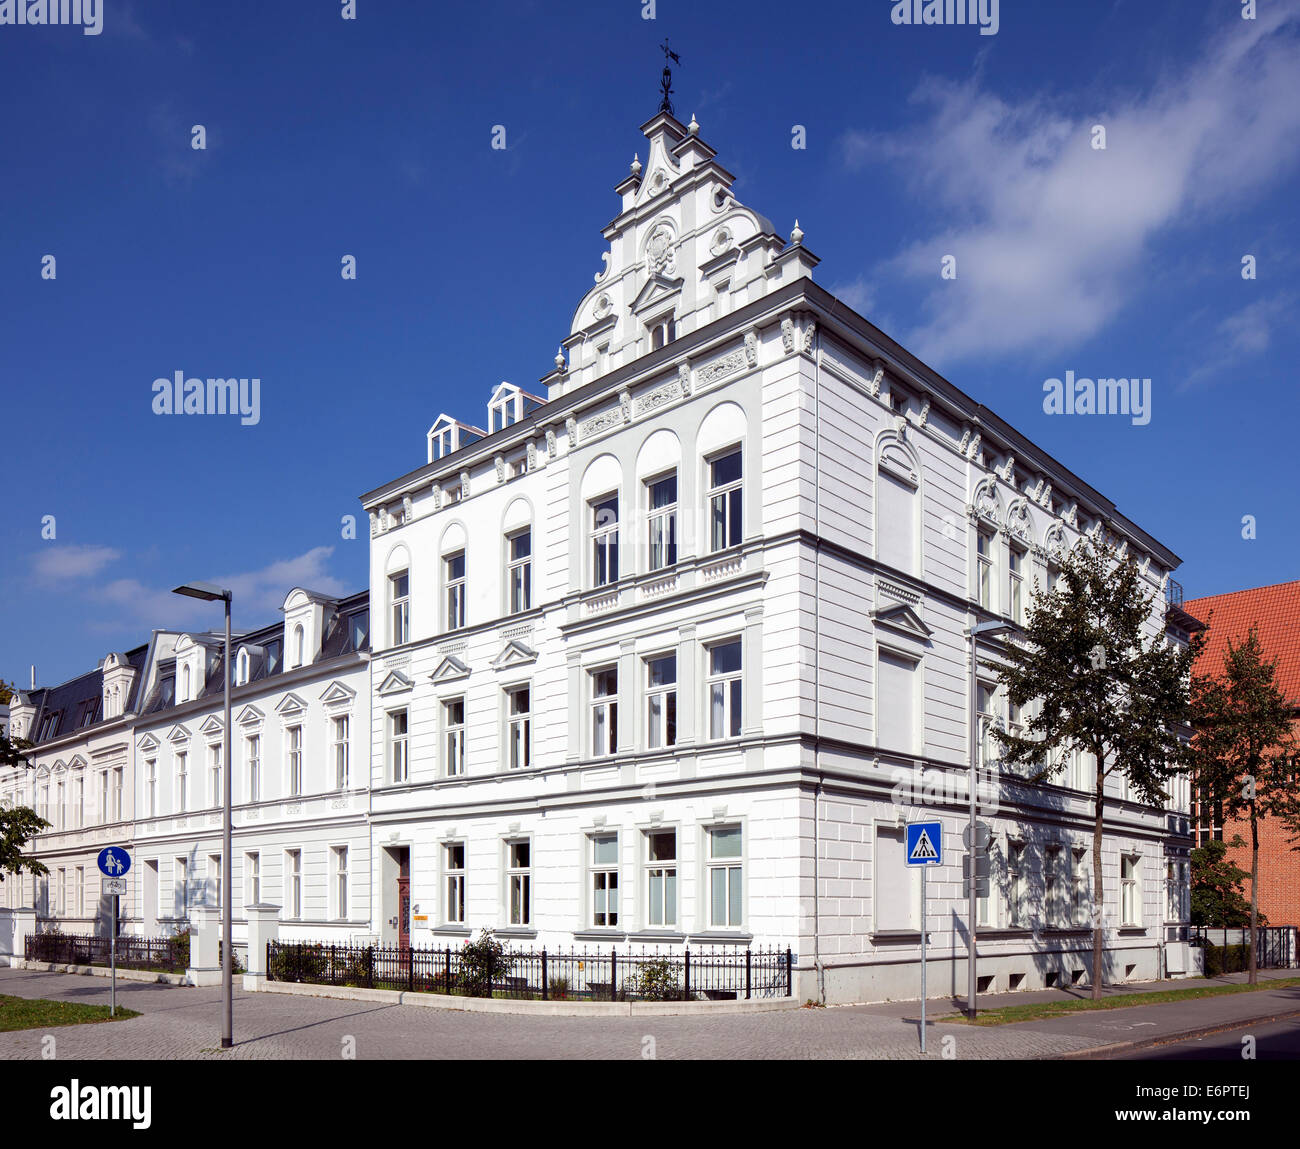 Historic residential and office buildings, Olof-Palme-Platz, Stralsund, Mecklenburg-Western Pomerania, Germany Stock Photo